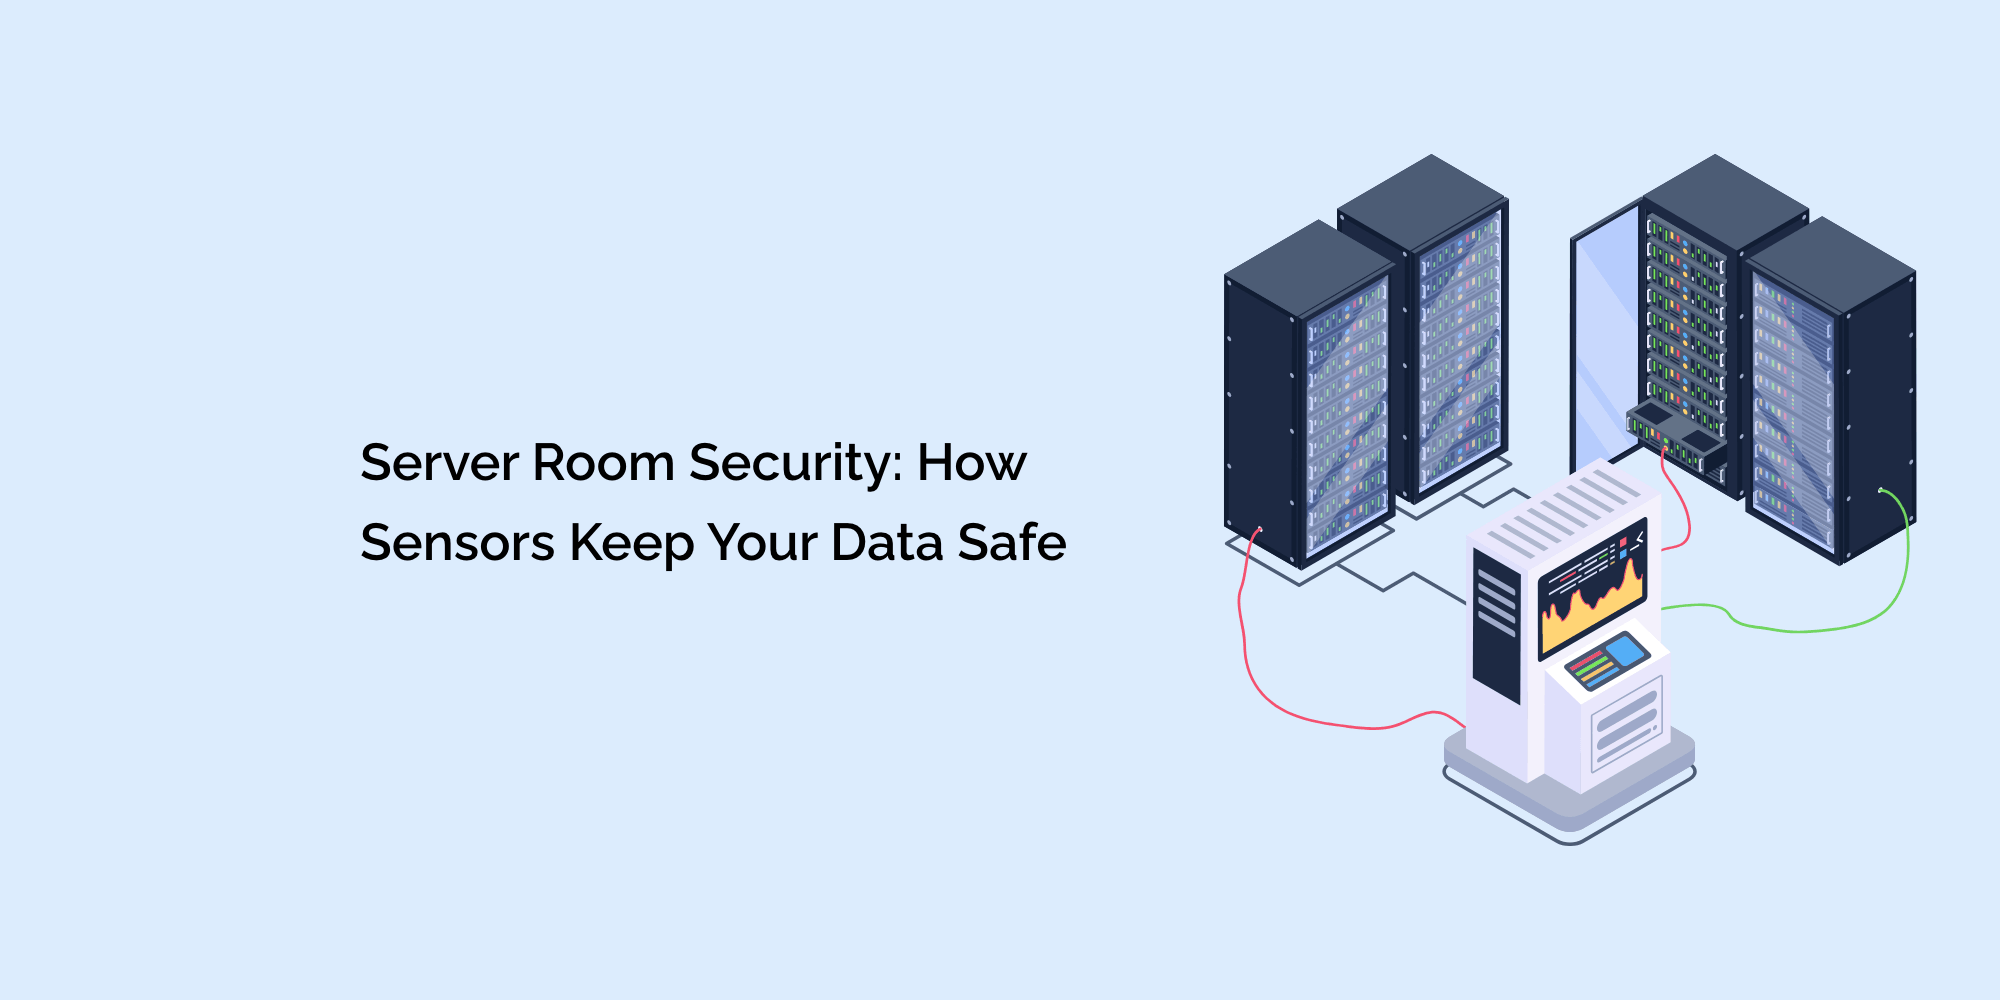 Server Room Security: How Sensors Keep Your Data Safe